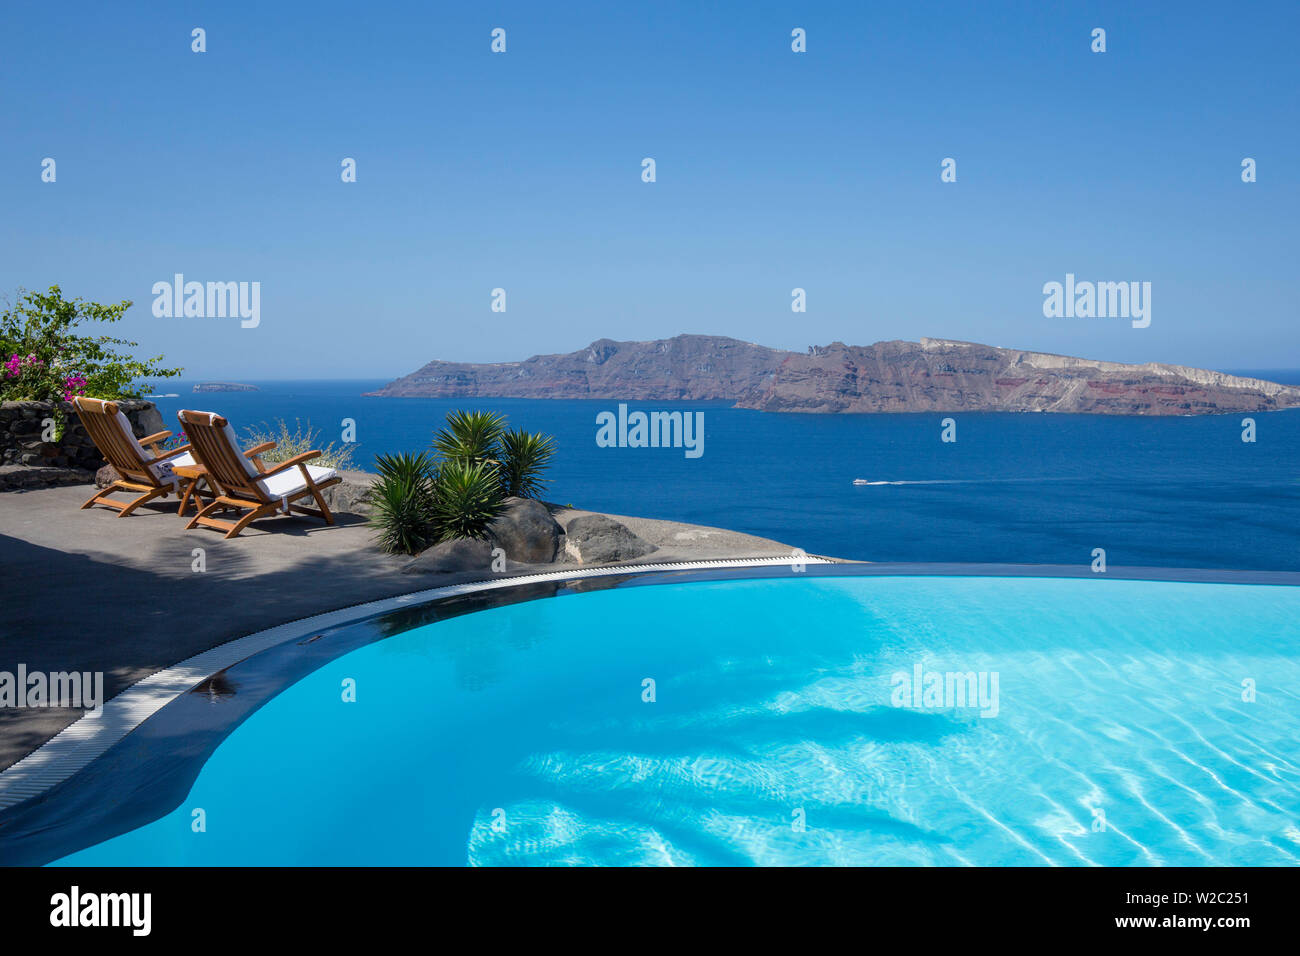 Das luxuriöse 5-Sterne-Hotel Perivolas hotel, Oia, Santorini (Thira), Kykladen, Griechenland Stockfoto